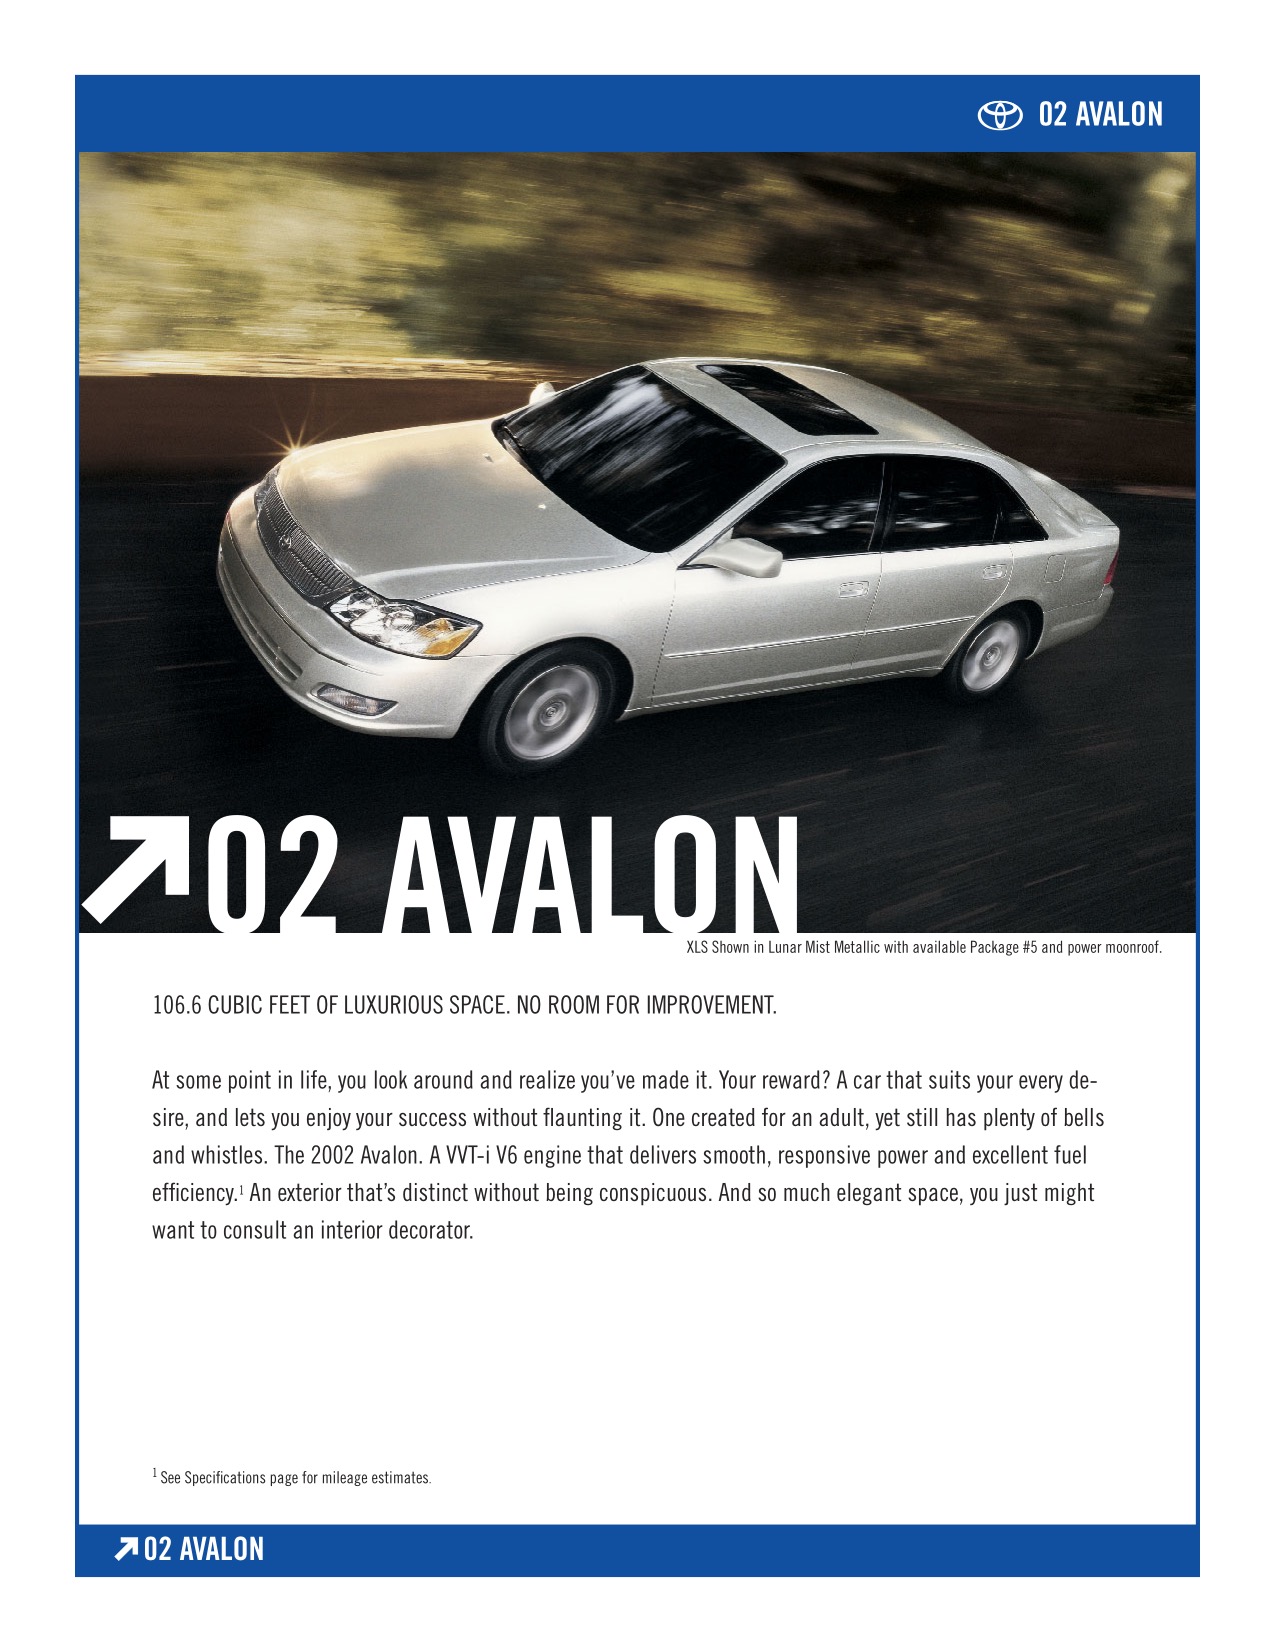 2002 Toyota Avalon Brochure